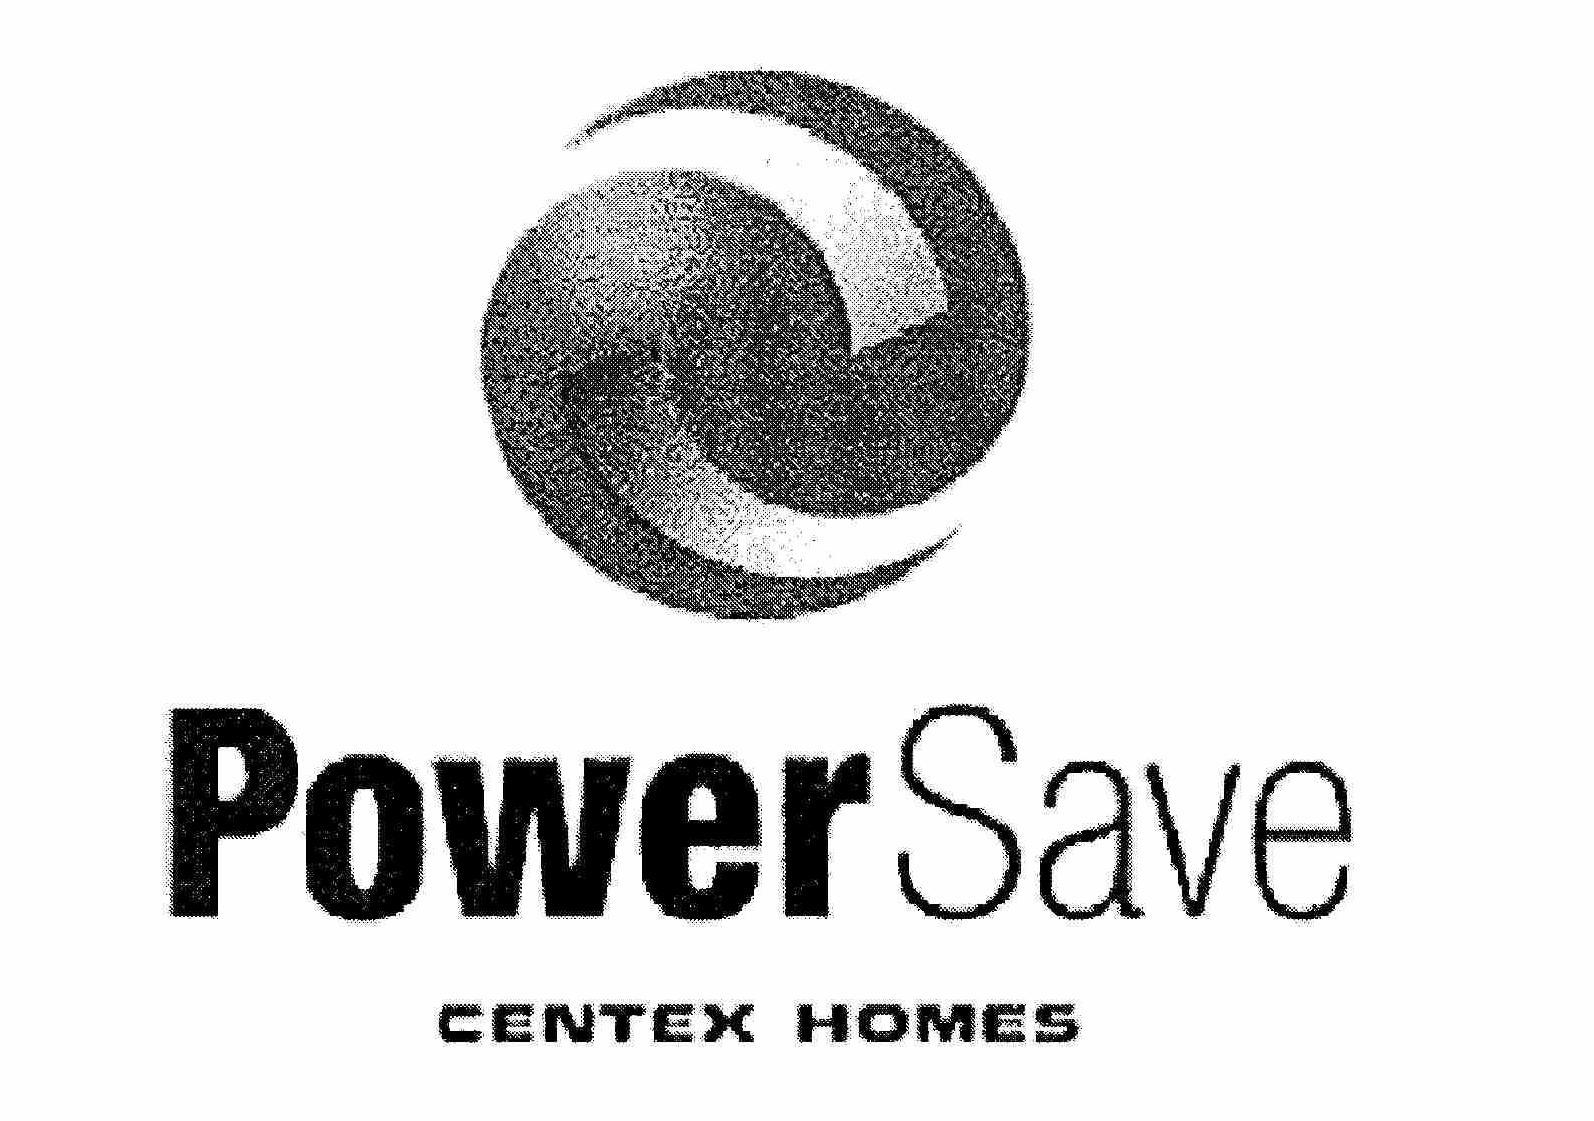  POWER SAVE CENTEX HOMES